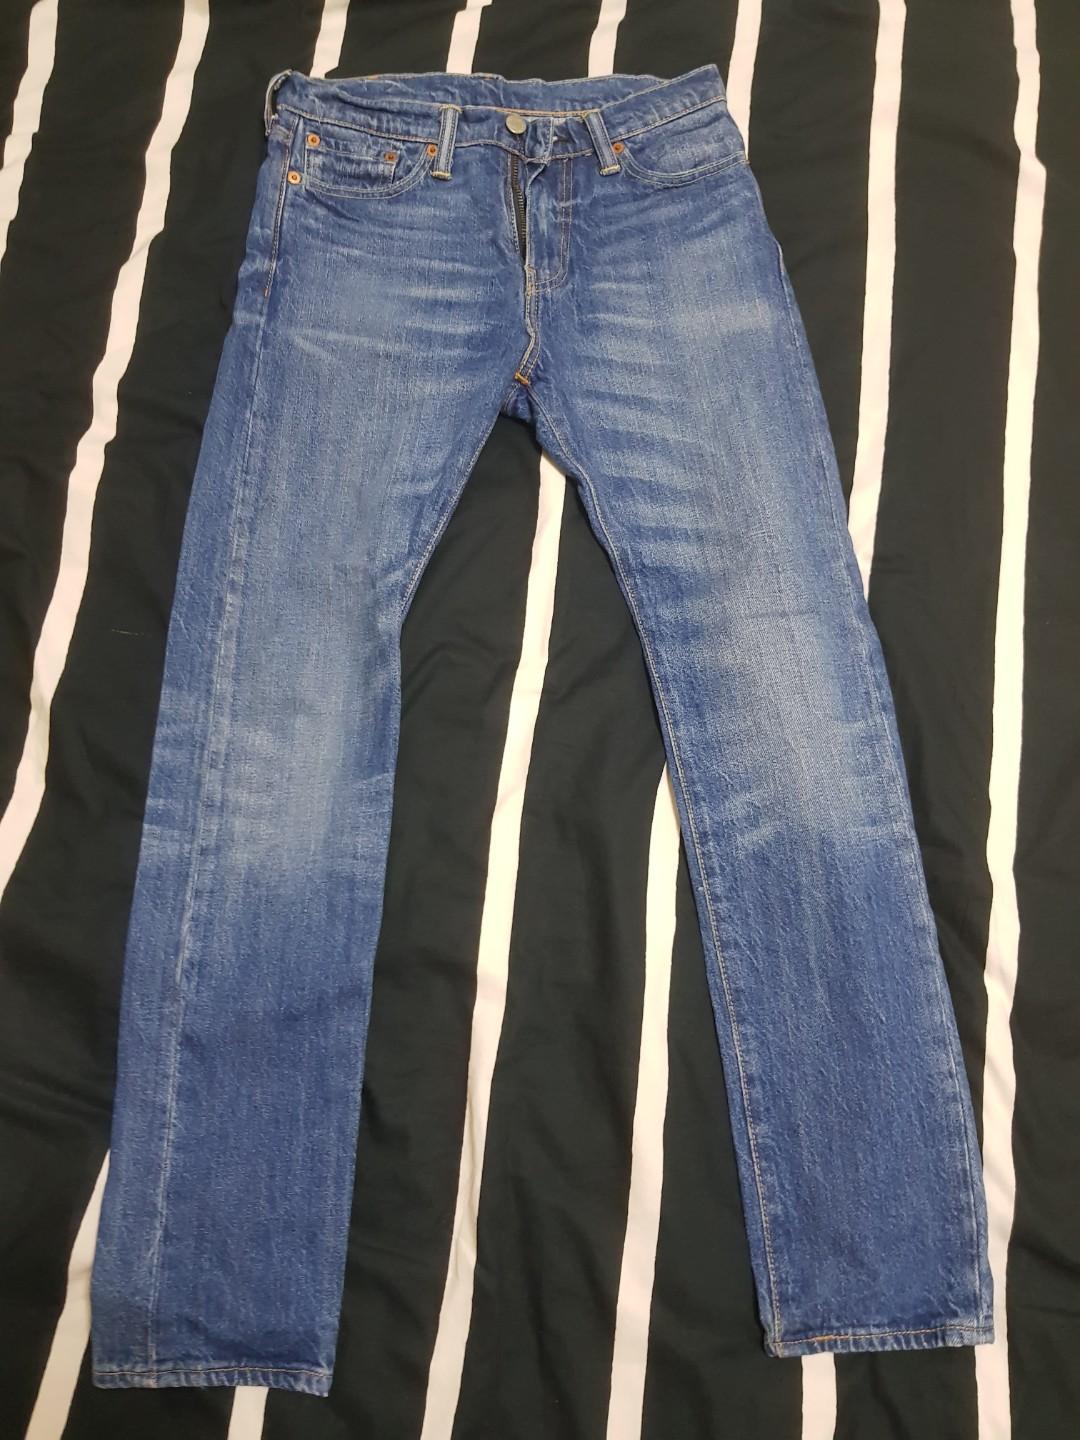 510 skinny jeans